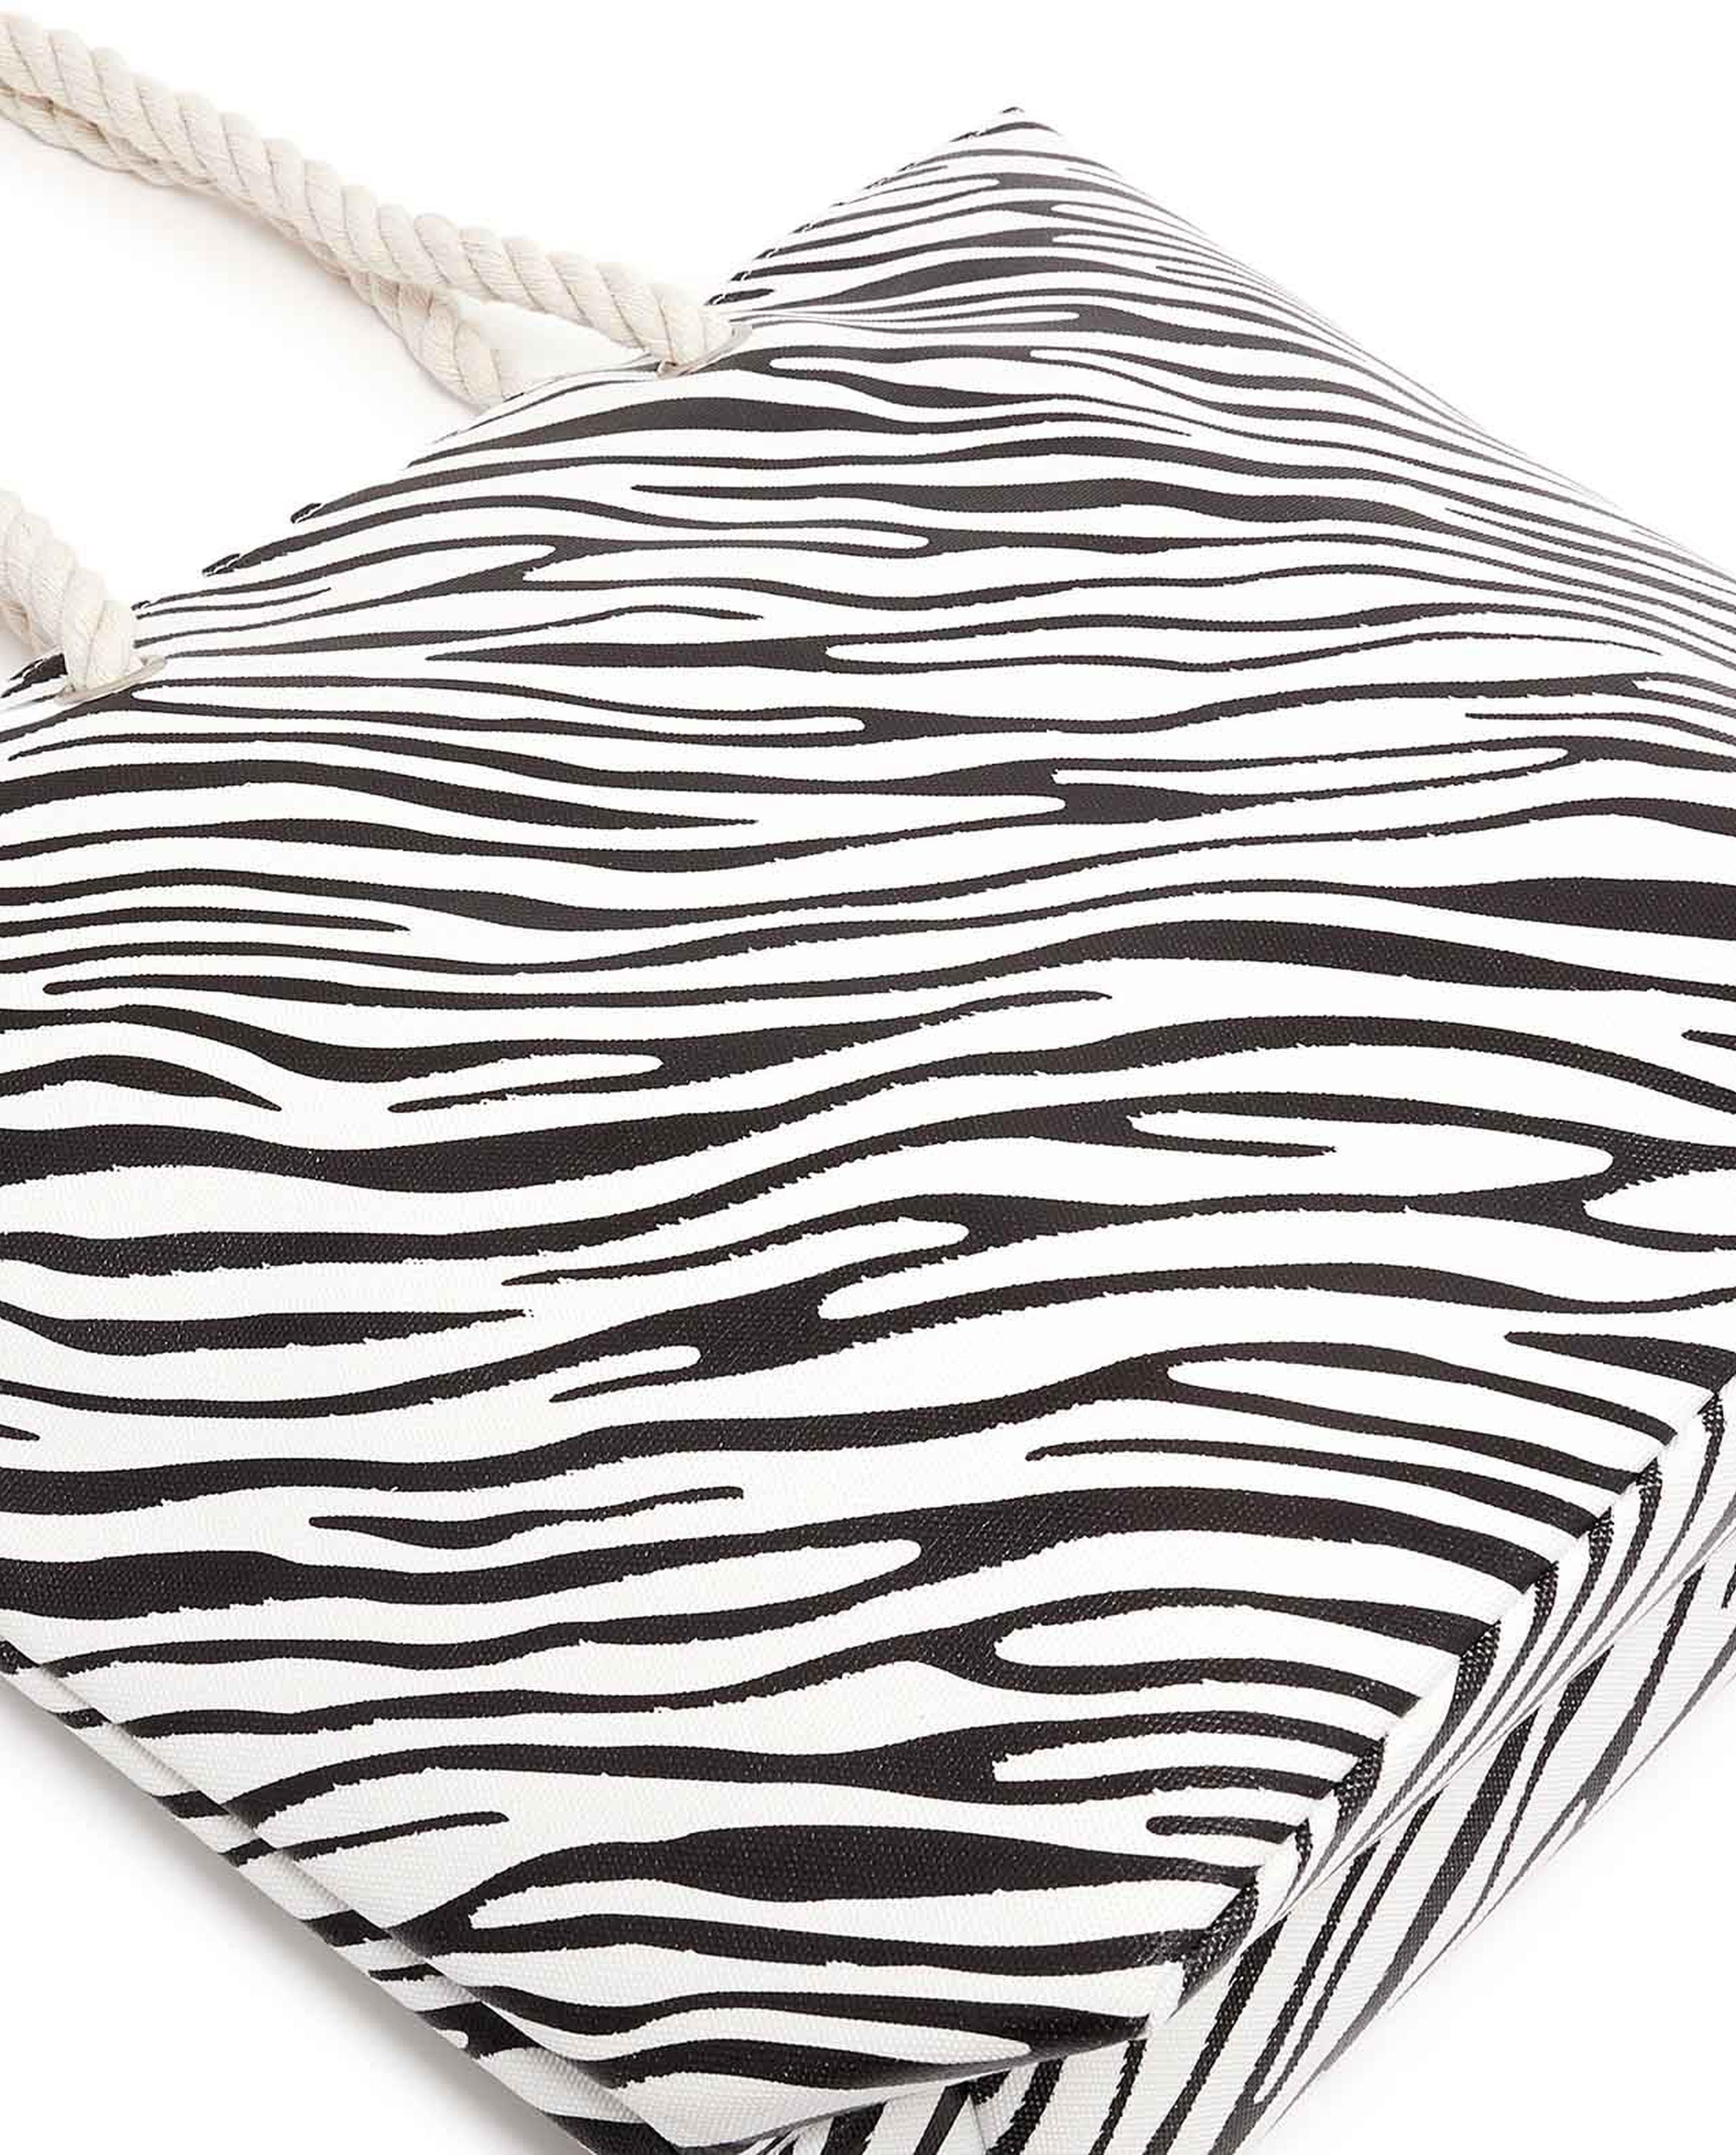 Zebra Printed Canvas Tote Beach Bag